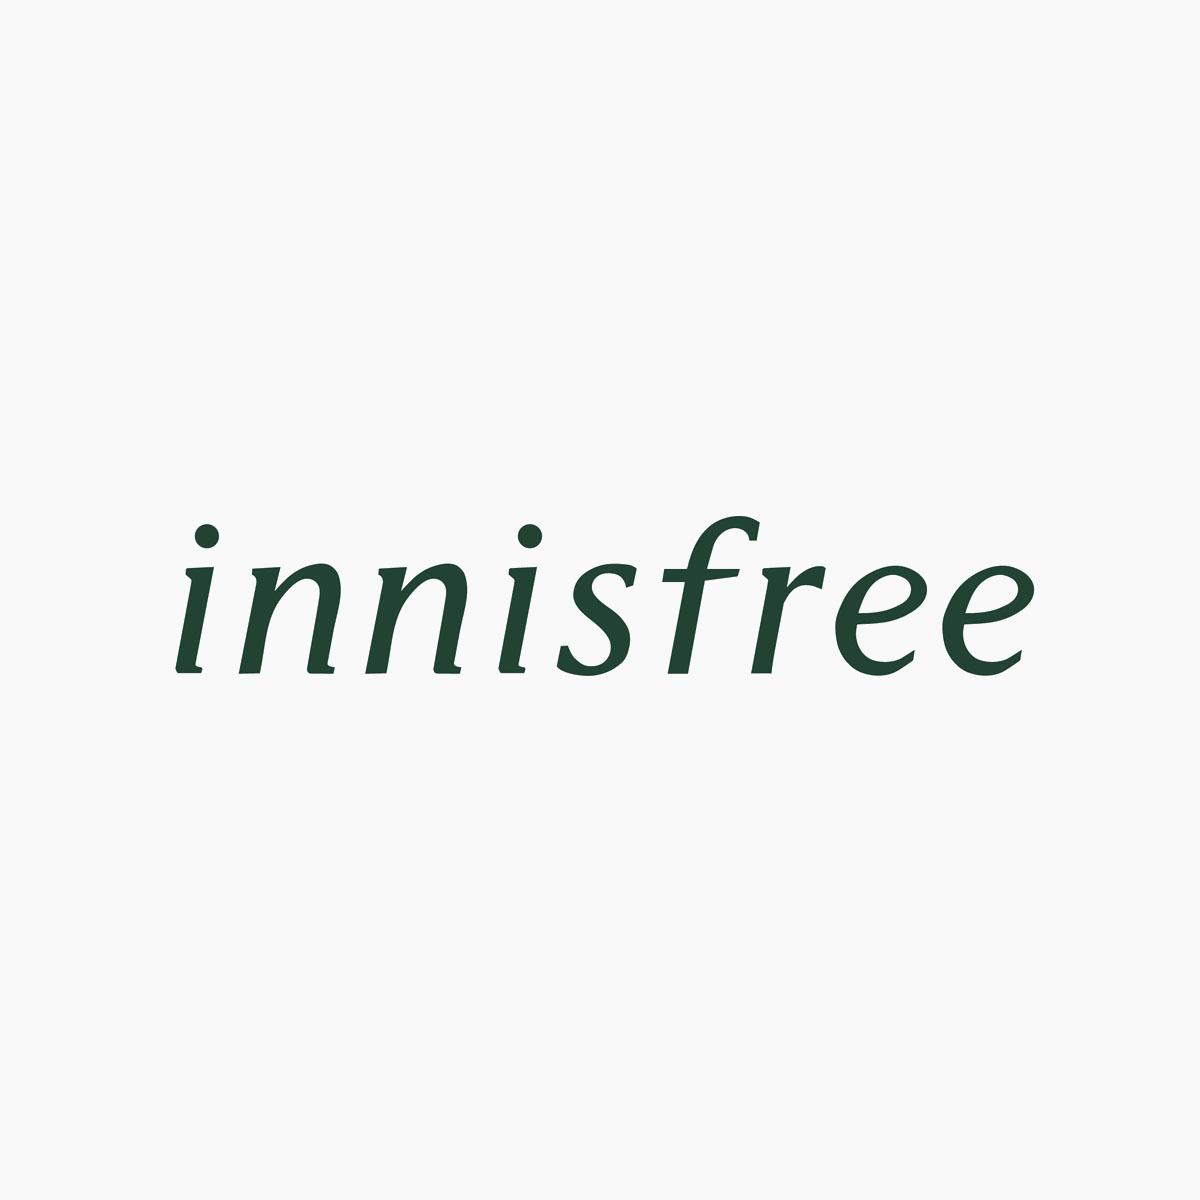 Innisfree-logo-image